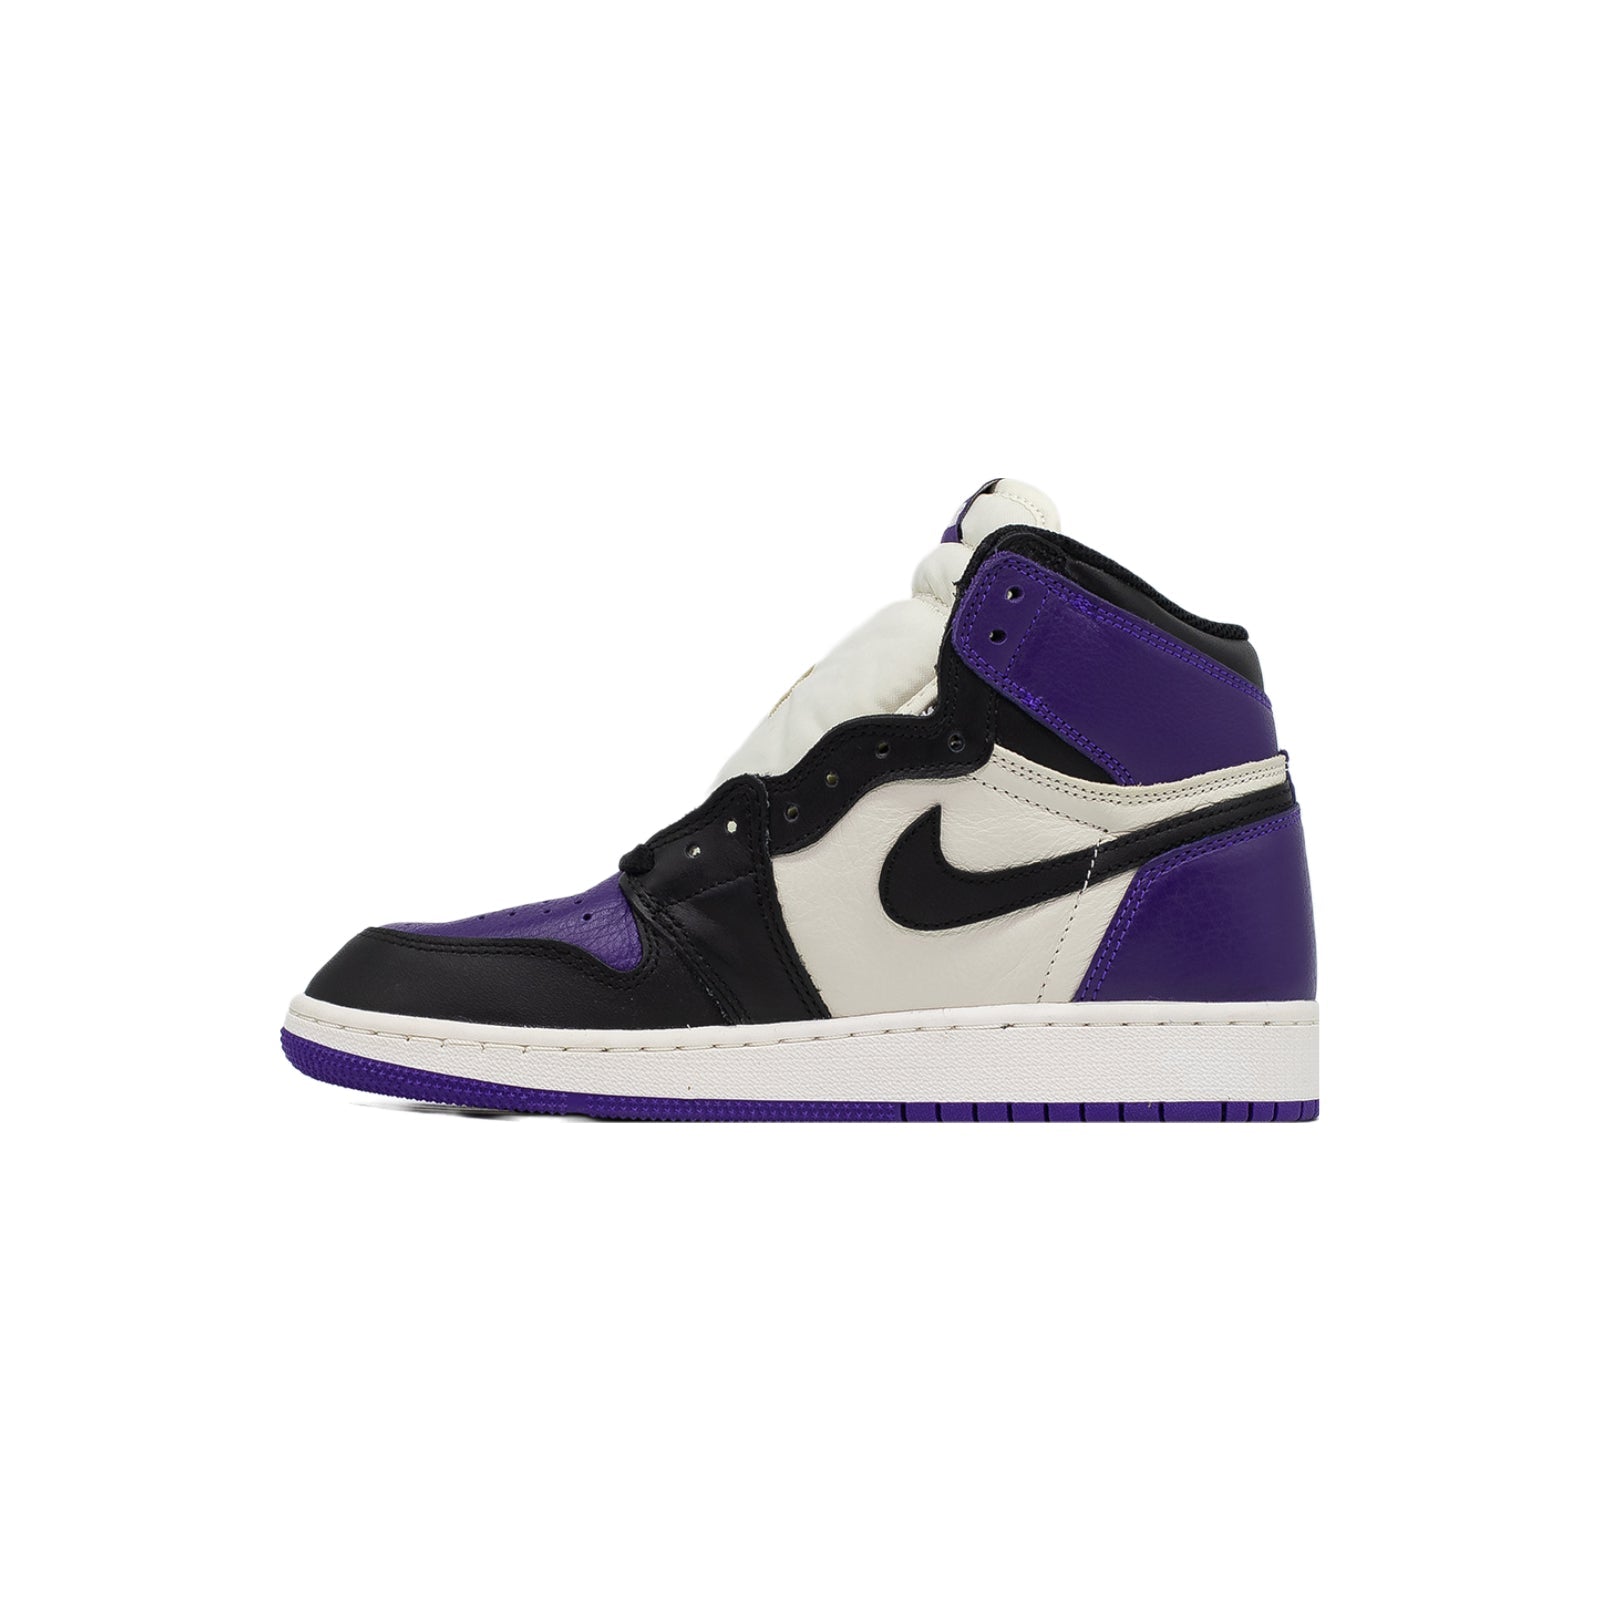 Air womens jordan black sneaker (GS), Court Purple